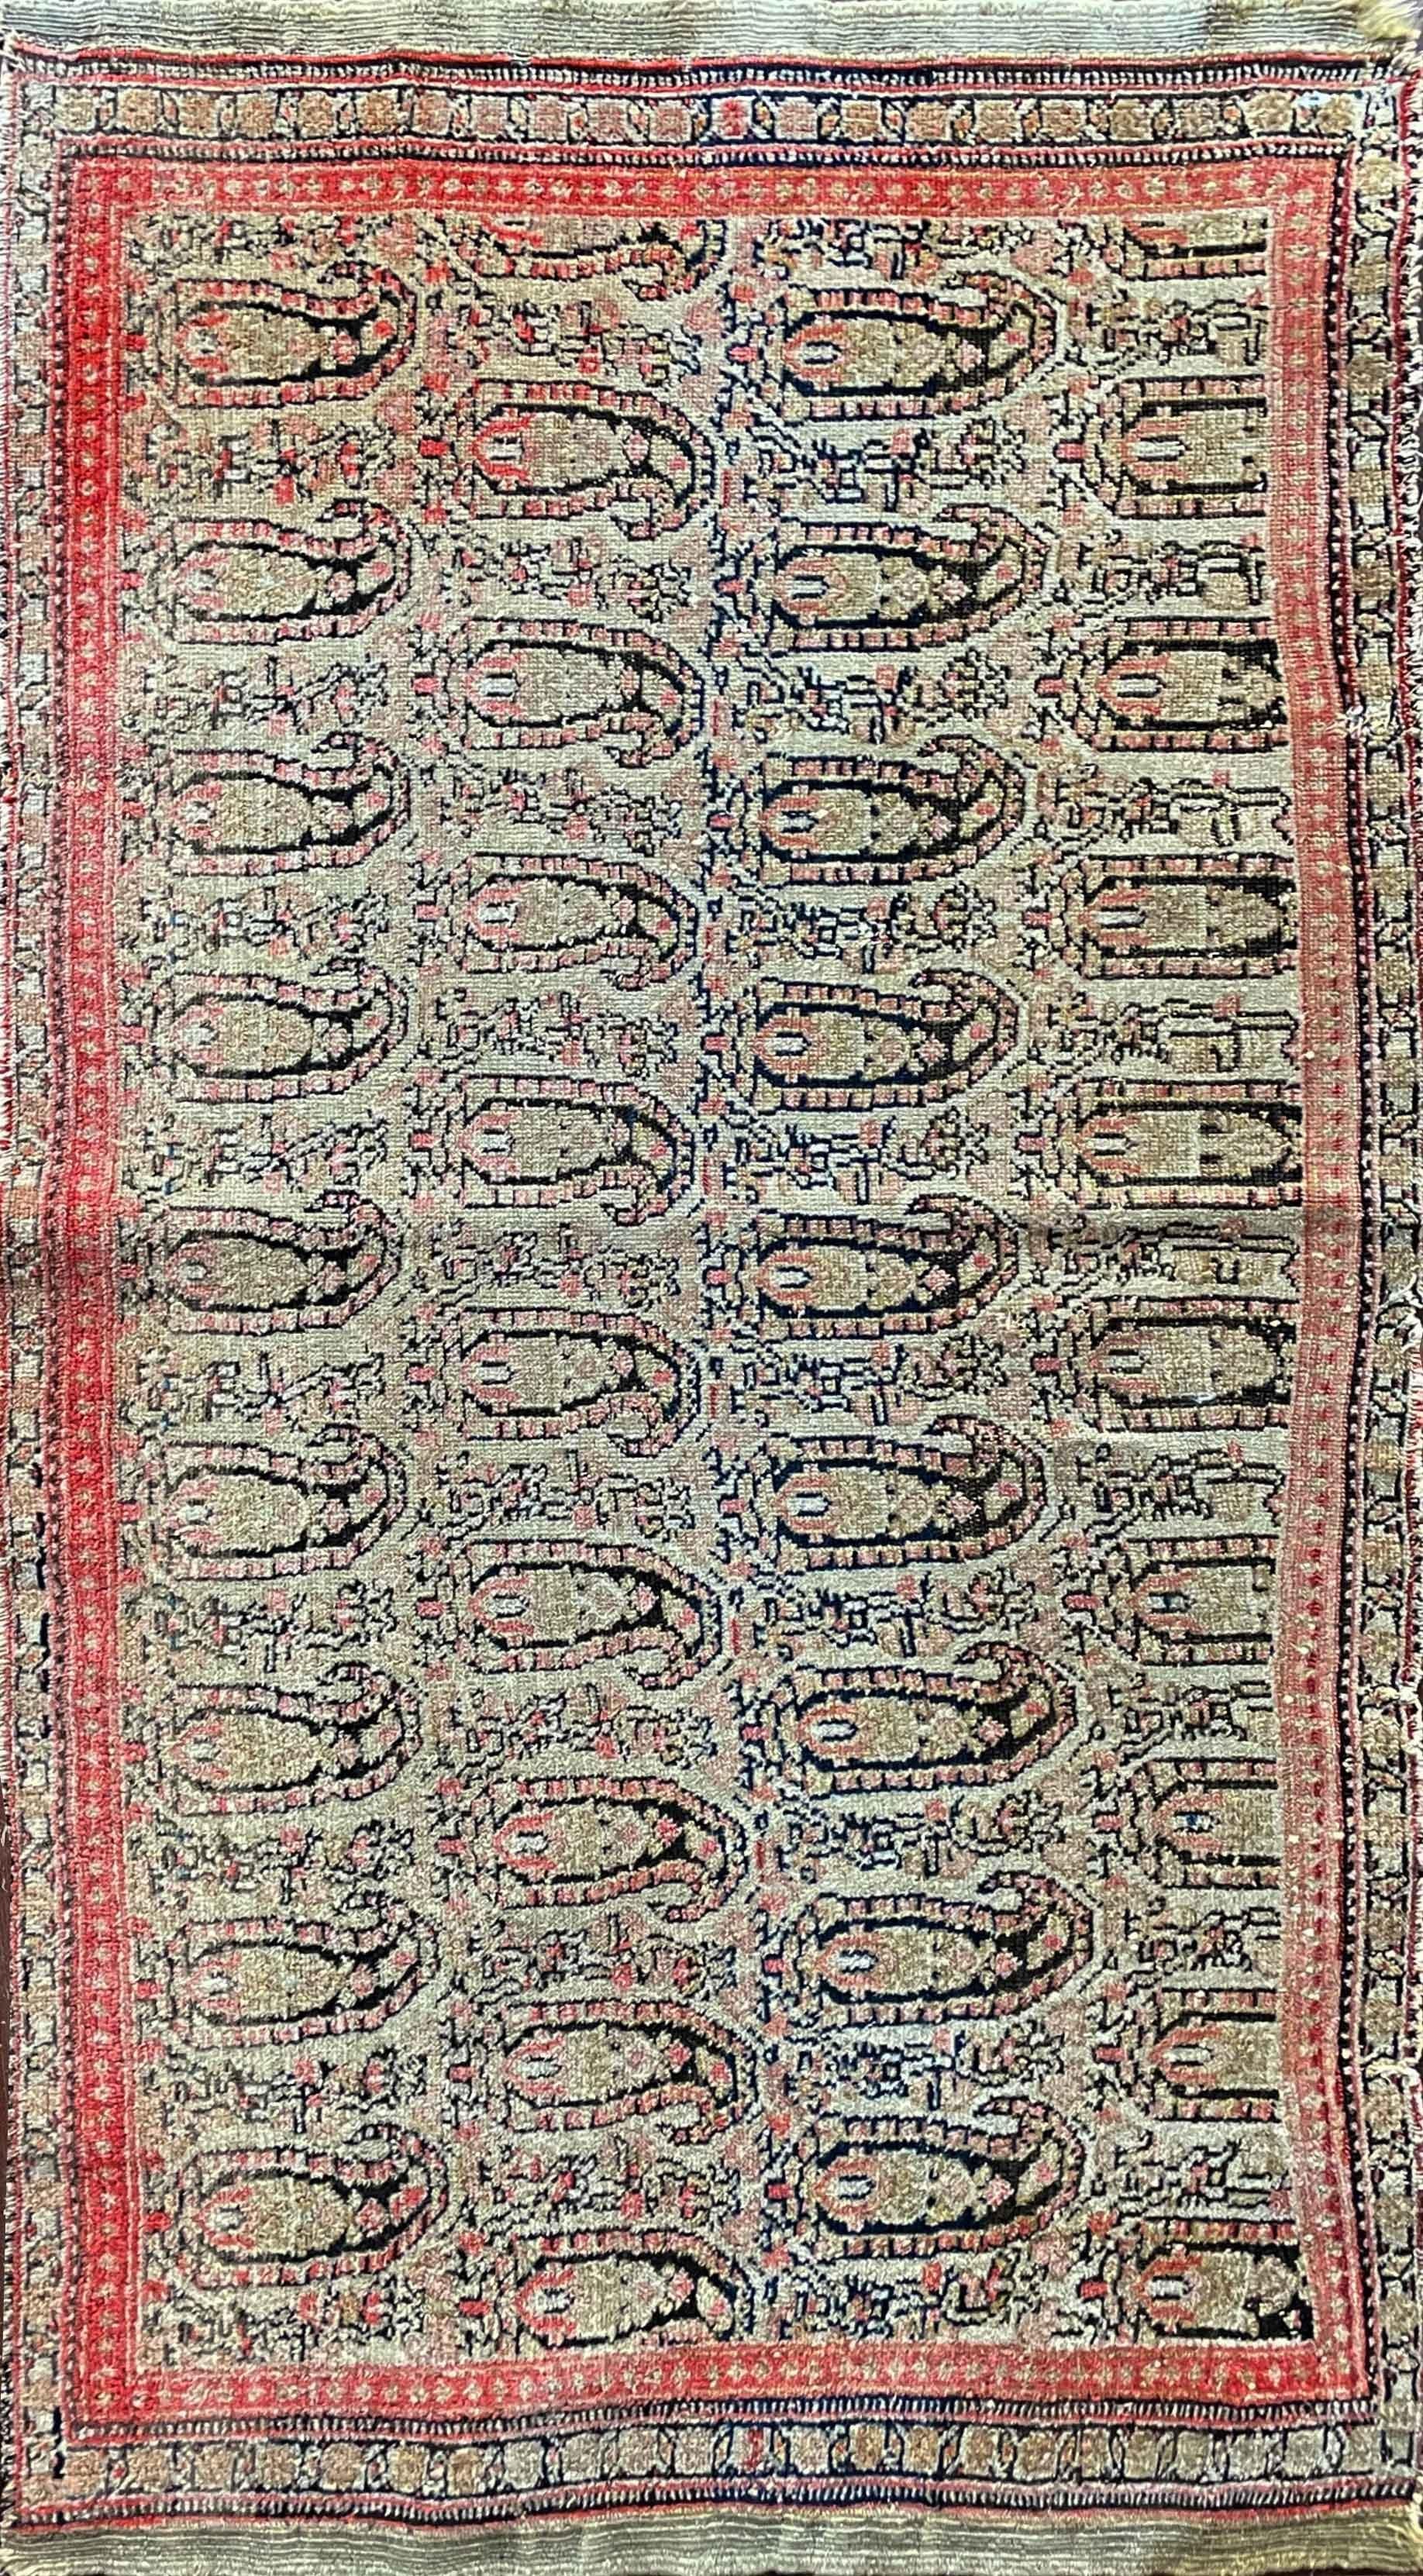 19th Century Antique Persian Senneh Rug, very fine